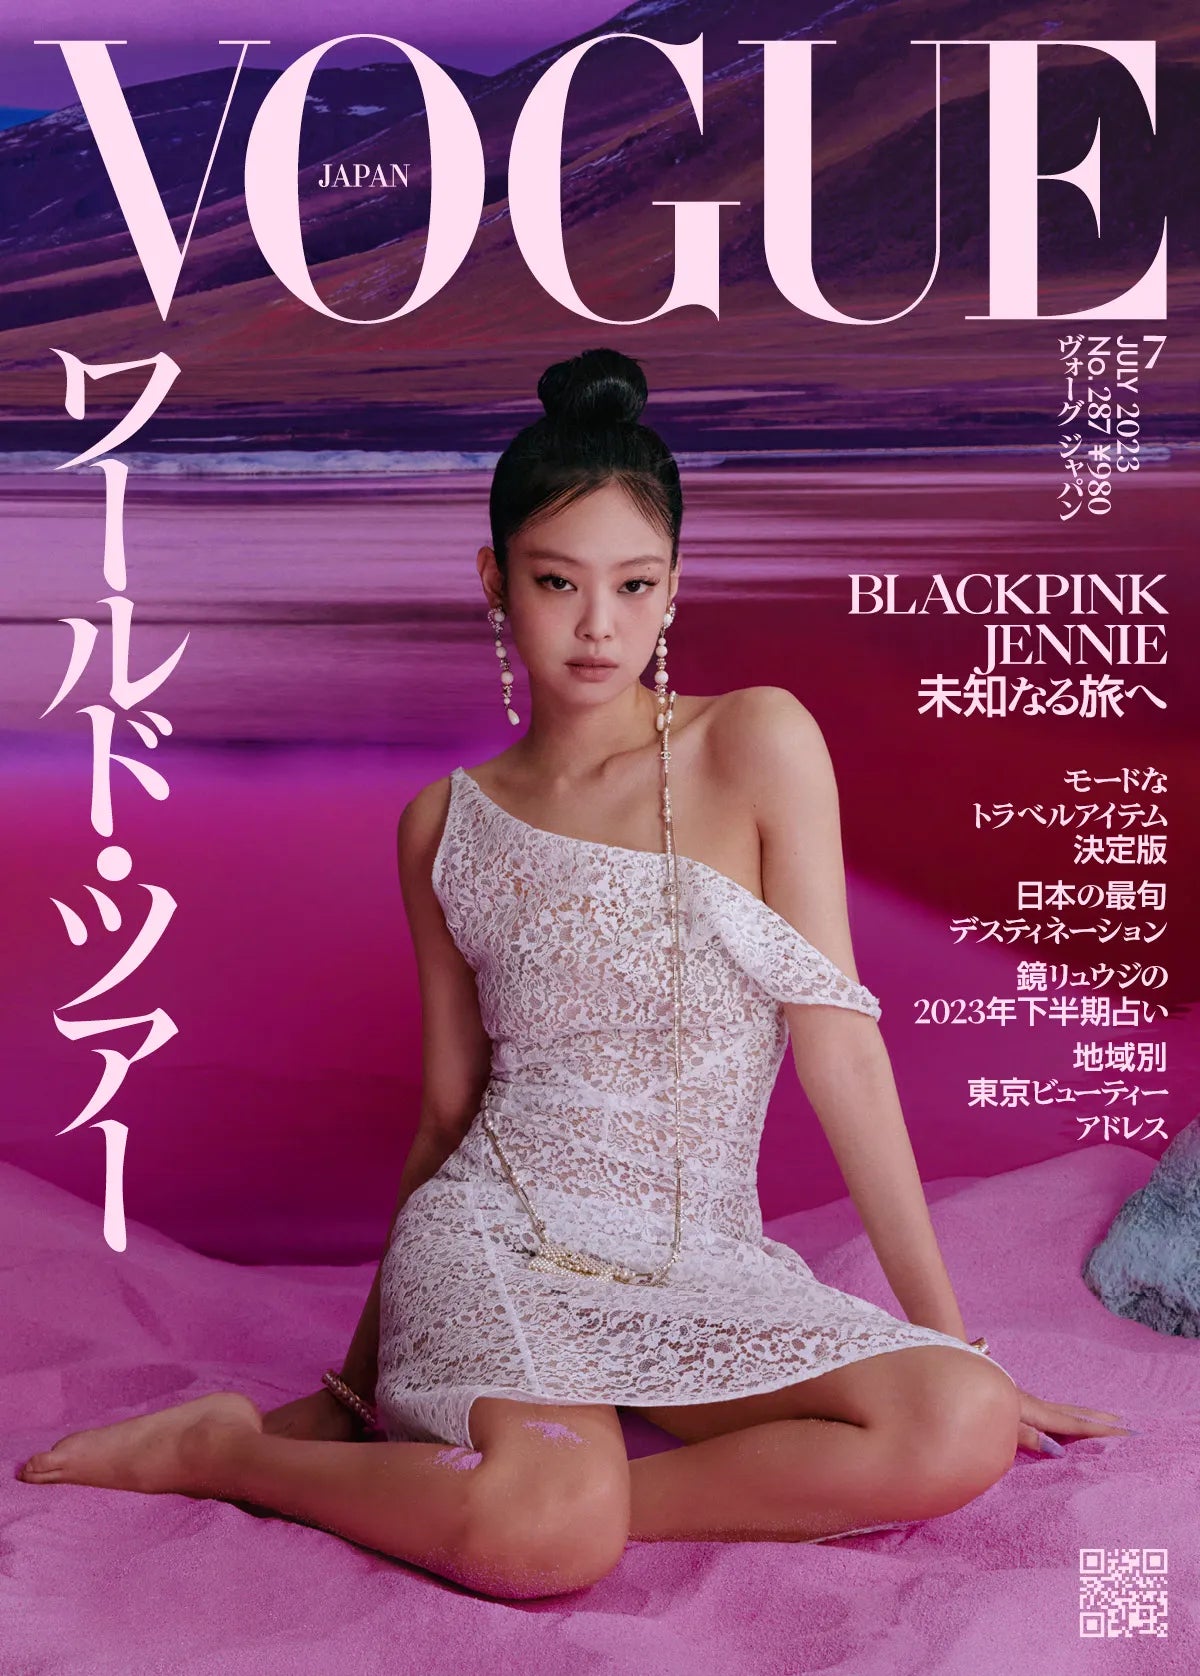 BLACKPINK JENNIE cover VOGUE Japan Magazine 2023 July